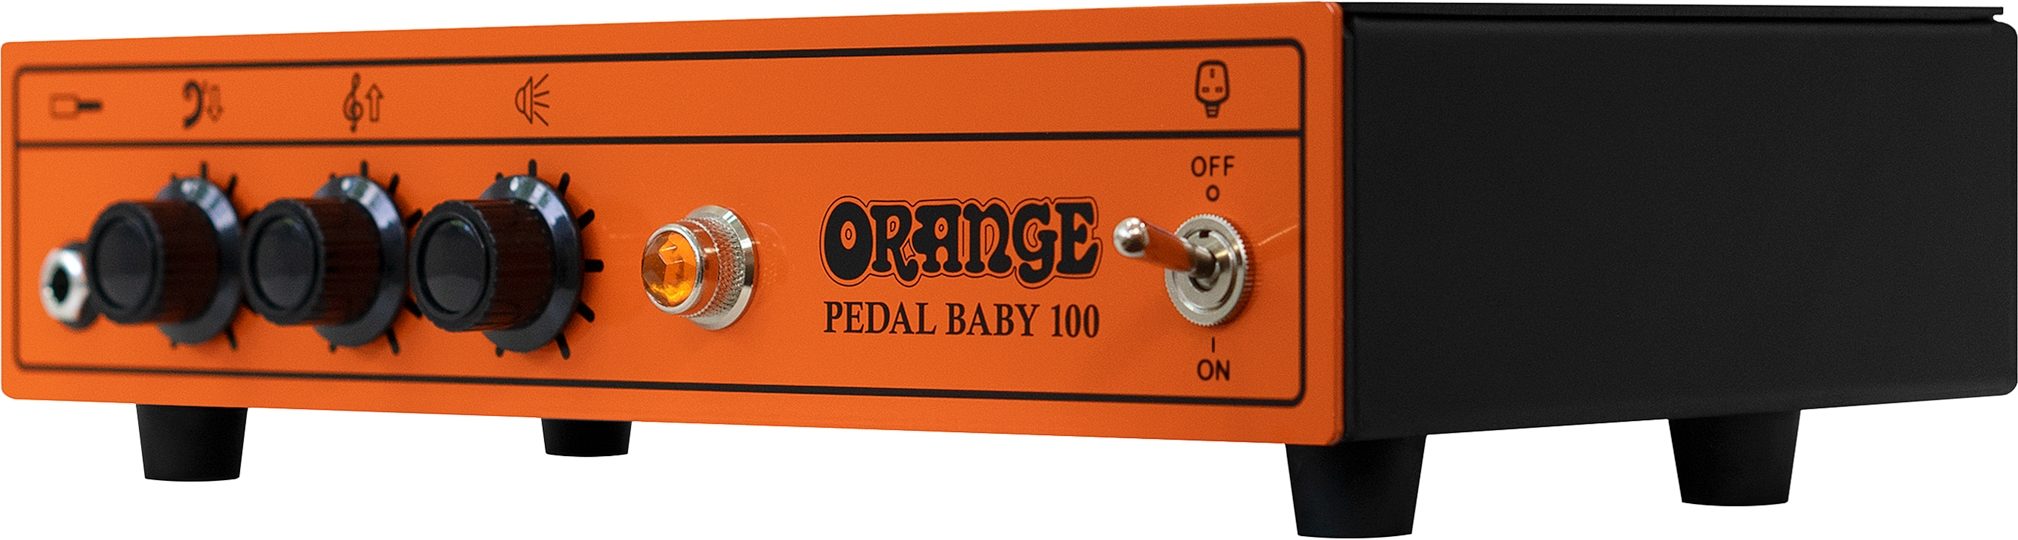 Orange Pedal Baby 100 Guitar Amplifier Head (100 Watts)